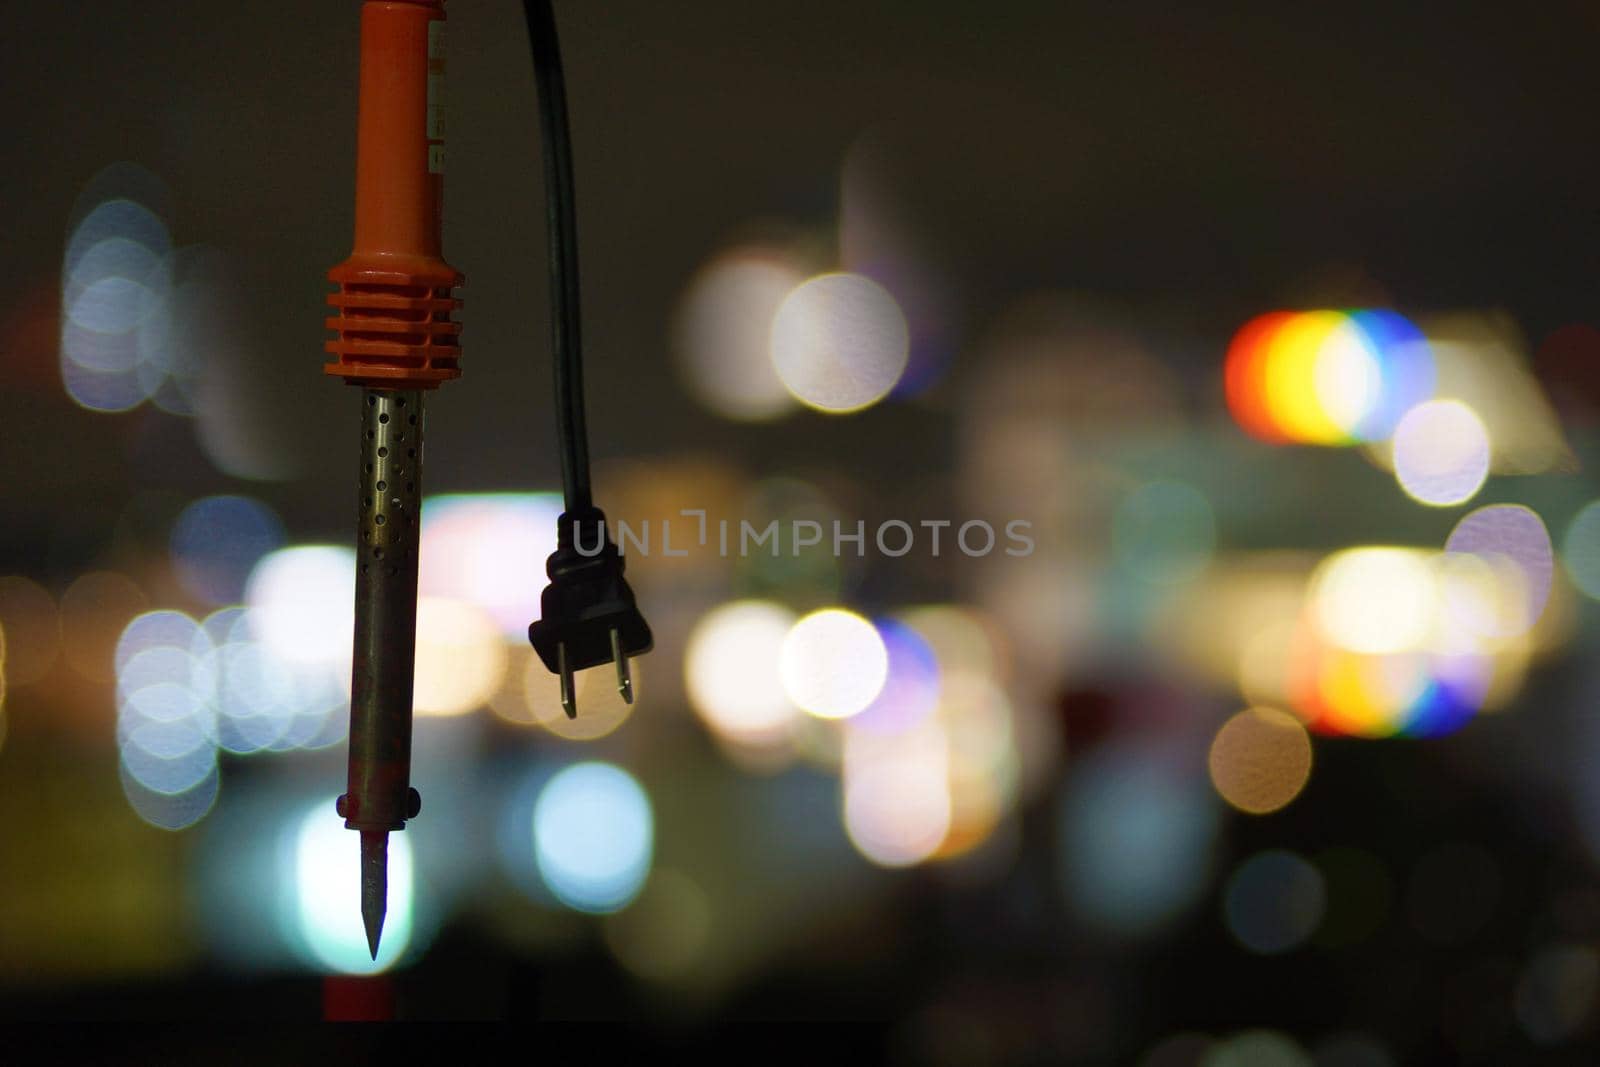 Solder and urban night view. Shooting Location: Tokyo metropolitan area